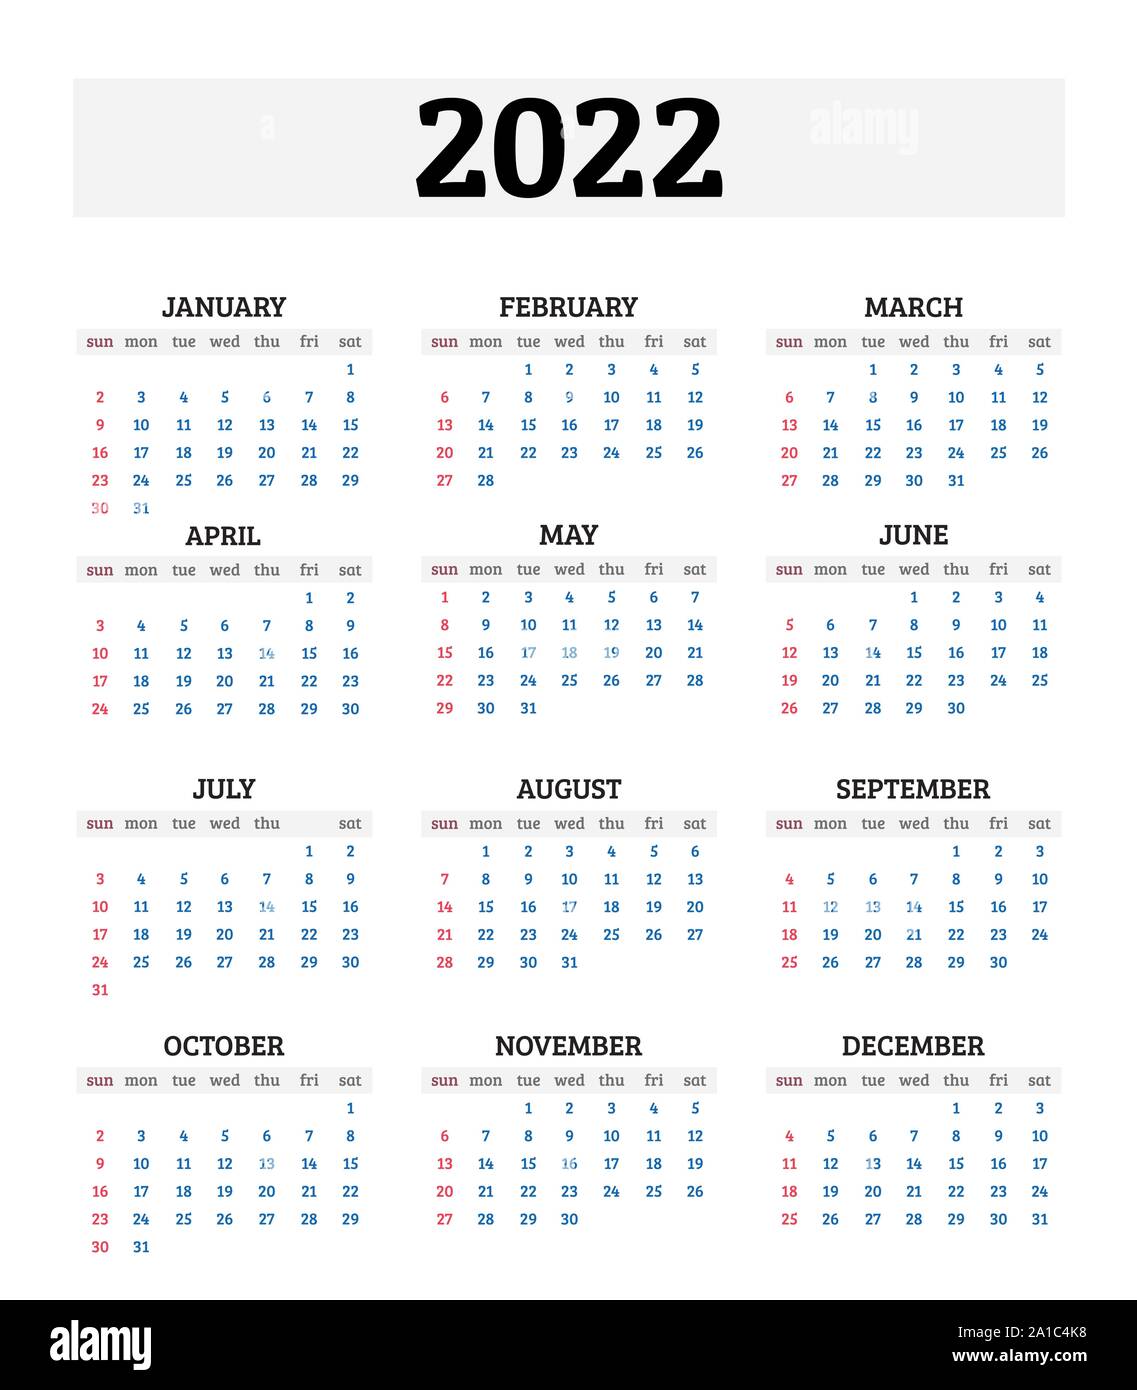 2022 Annual Calendar Vector Illustration Stock Vector Image And Art Alamy